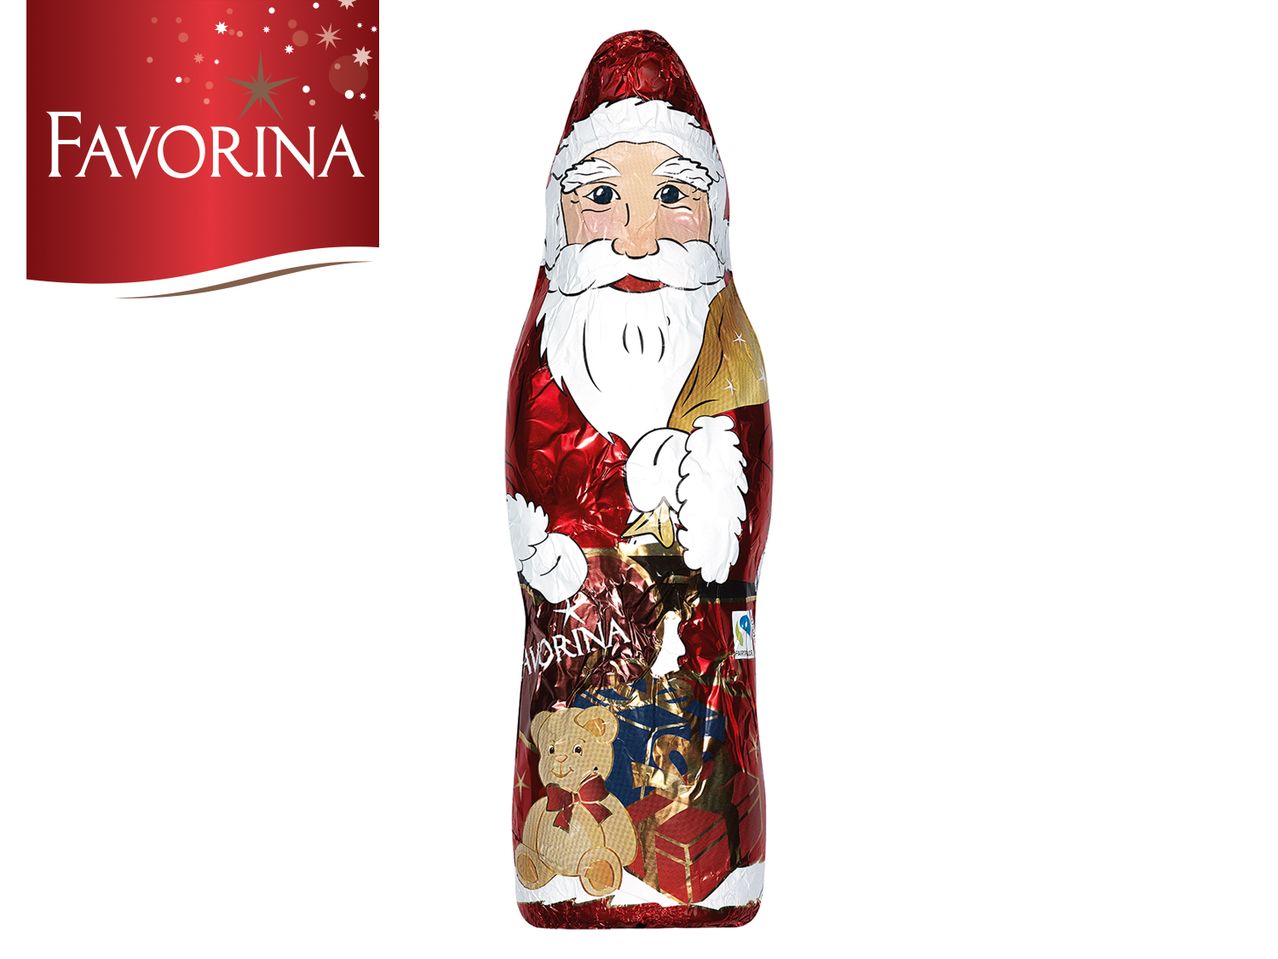 Go to full screen view: Favorina Chocolate Santa - Image 1